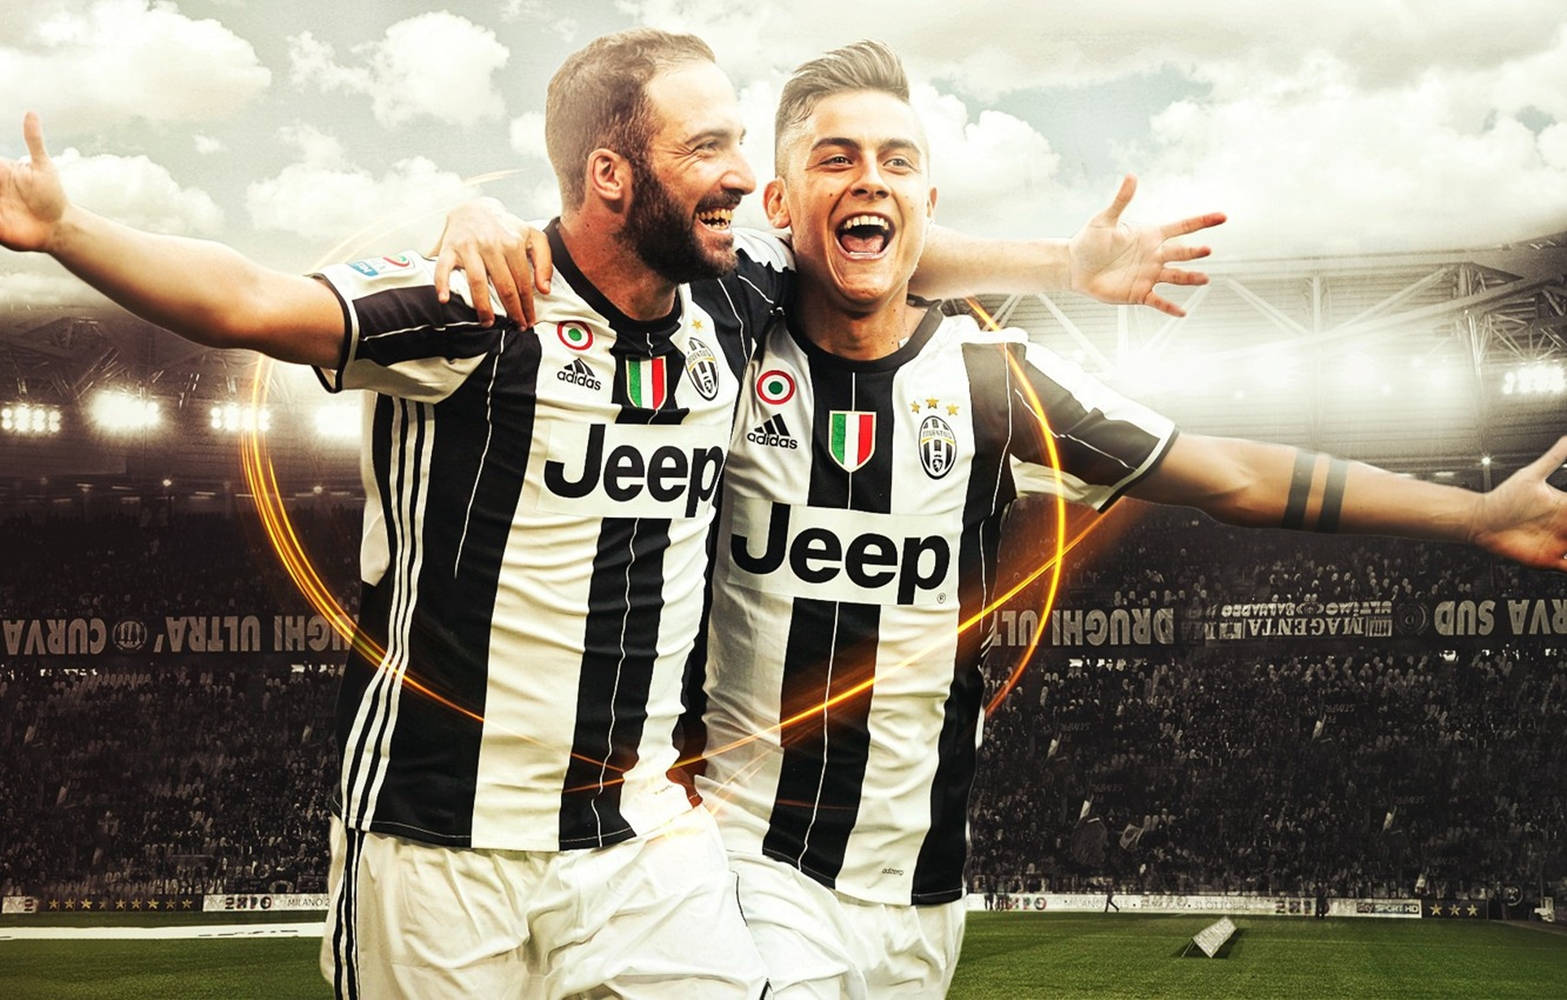 Paulo Dybala og Gonzalo Higuain fra Juventus FC⃣ i forgrunden for et slående⚡ baggrund. Wallpaper